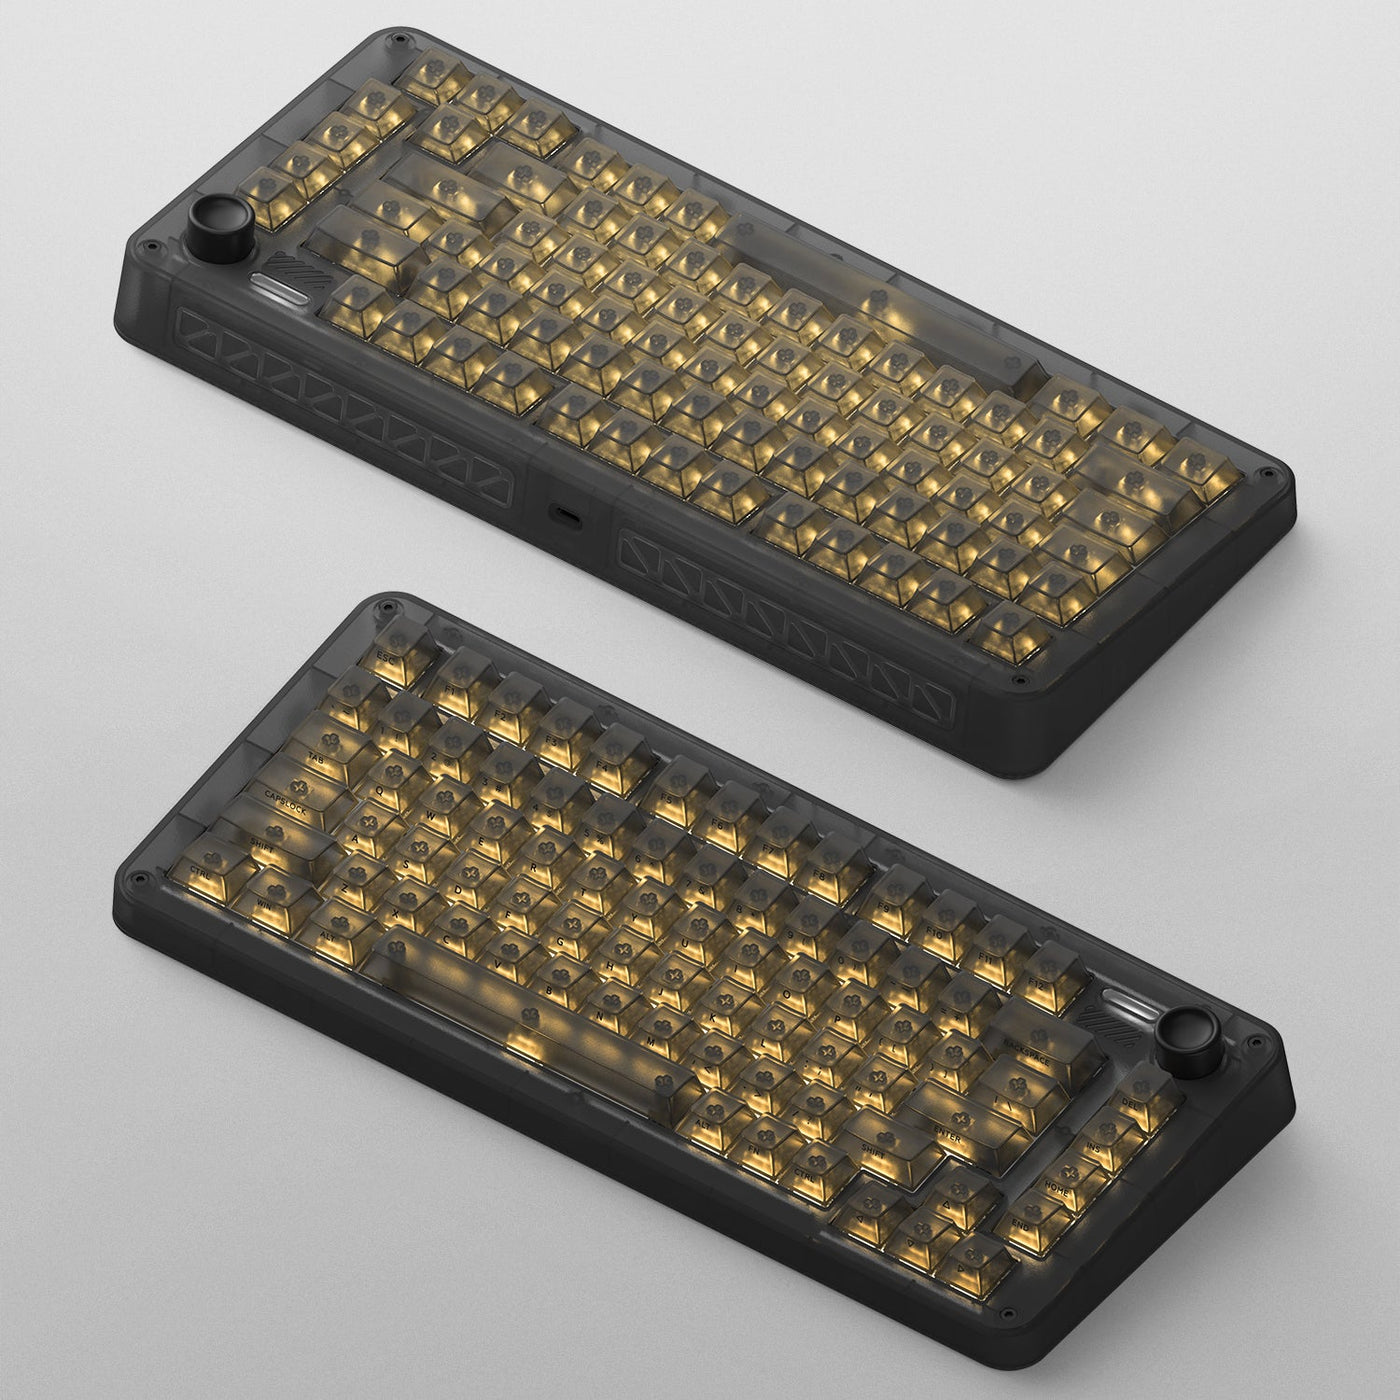 IQUNIX ZX75 / OG80 Dark Side RS Version Wireless Mechanical Keyboard